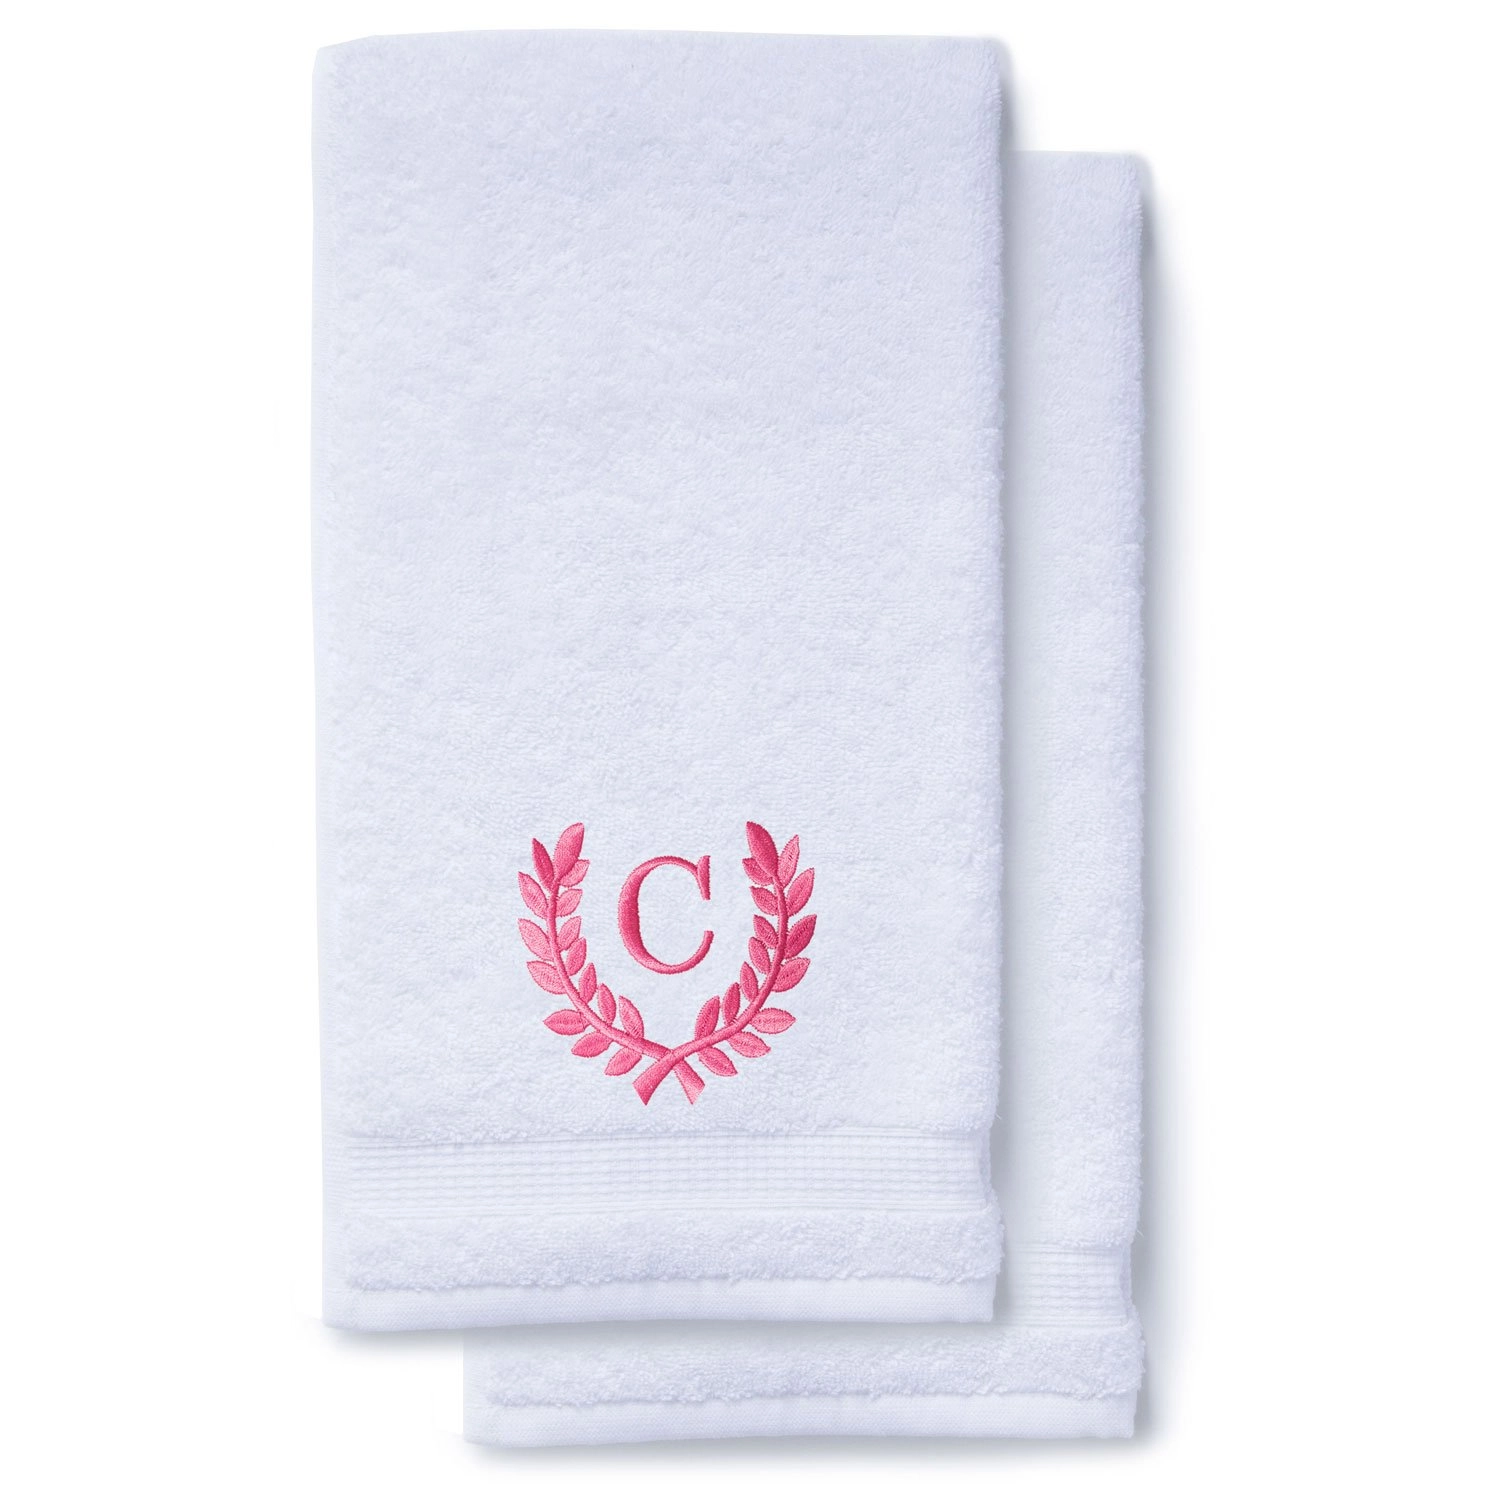 Wholesale Hand Towel, Cheap Towel, Promotional Towel